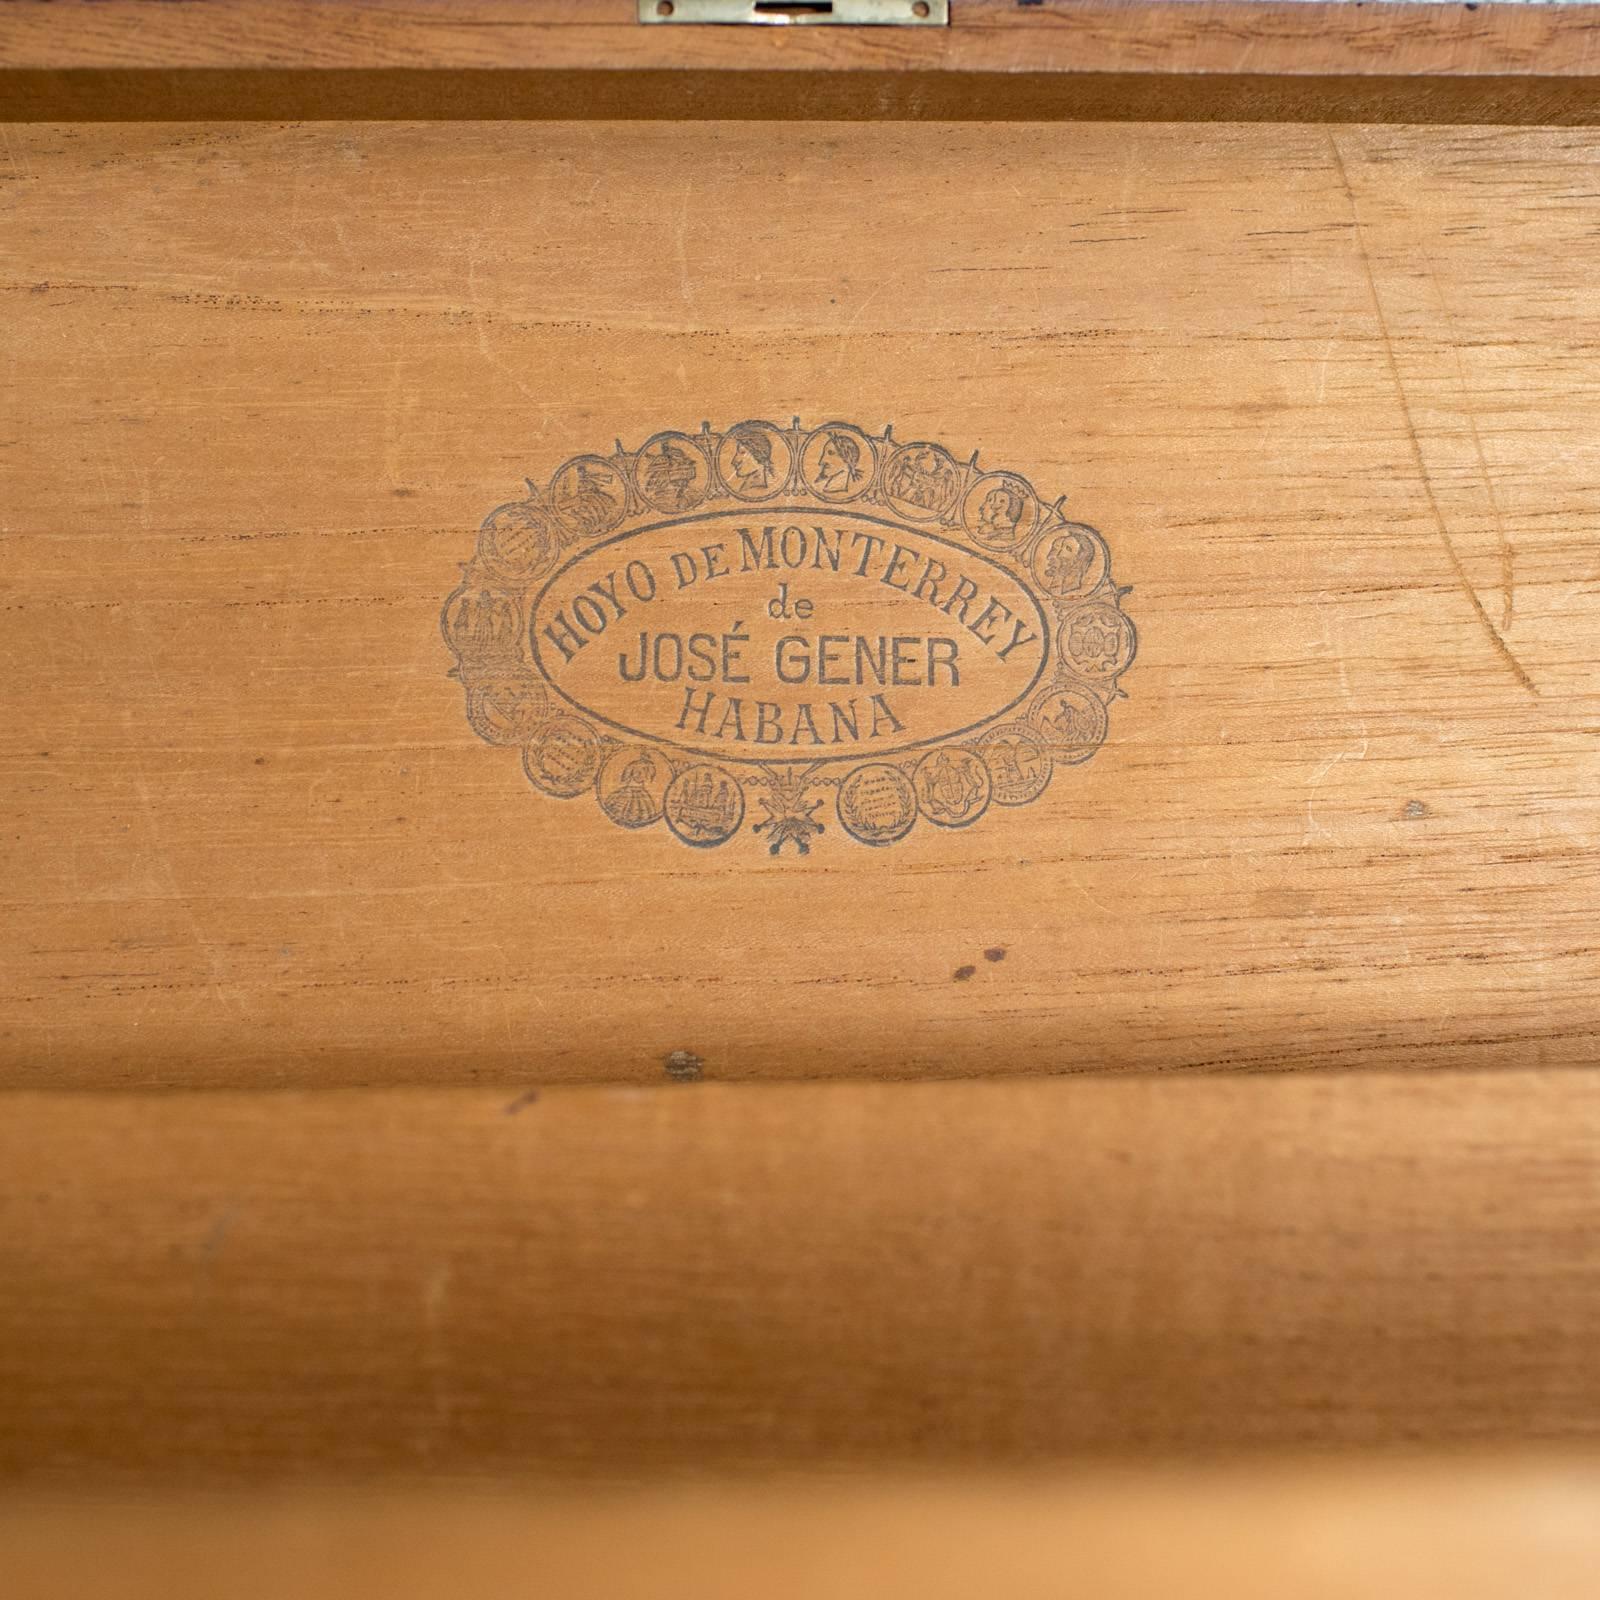 English Antique Wooden Cigar Box, Hoyo De Monterrey, Havana, Habana, Humidor, circa 1920